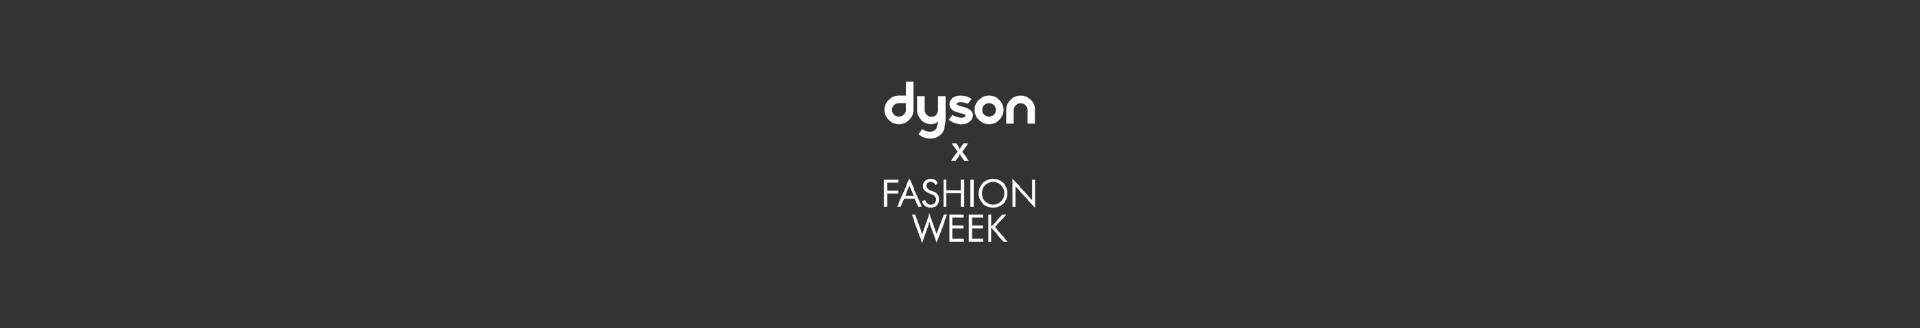 Dyson x Fashion Week Logo